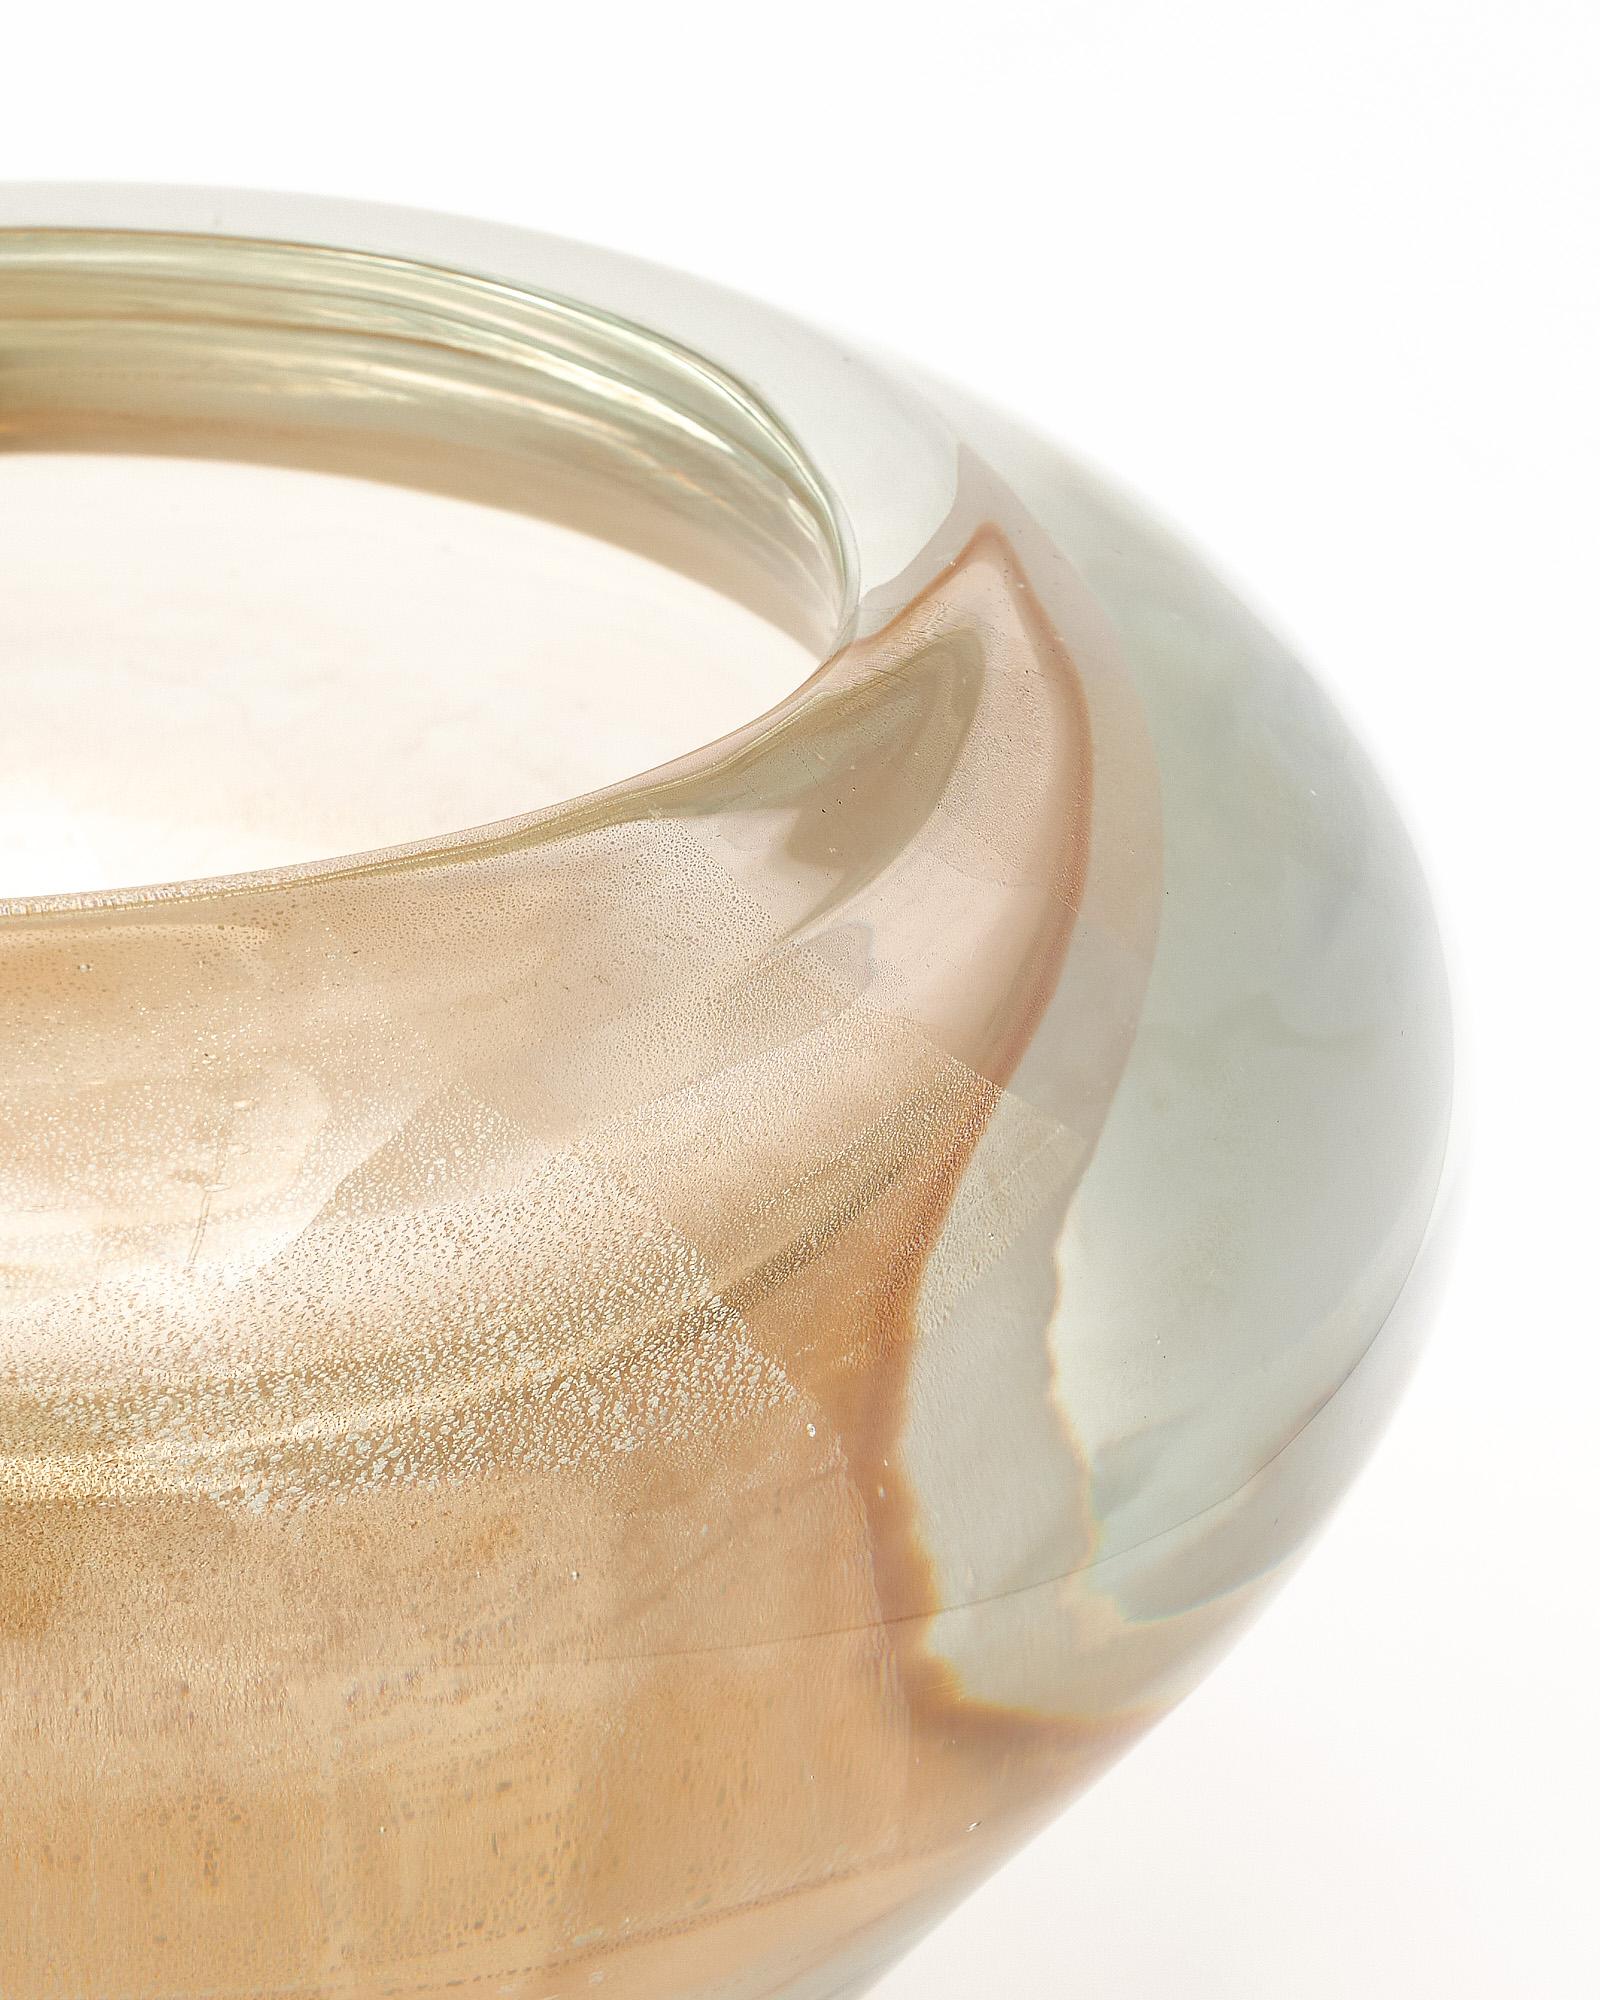 Murano Glass Avventurina Sommerso Bowl In New Condition For Sale In Austin, TX